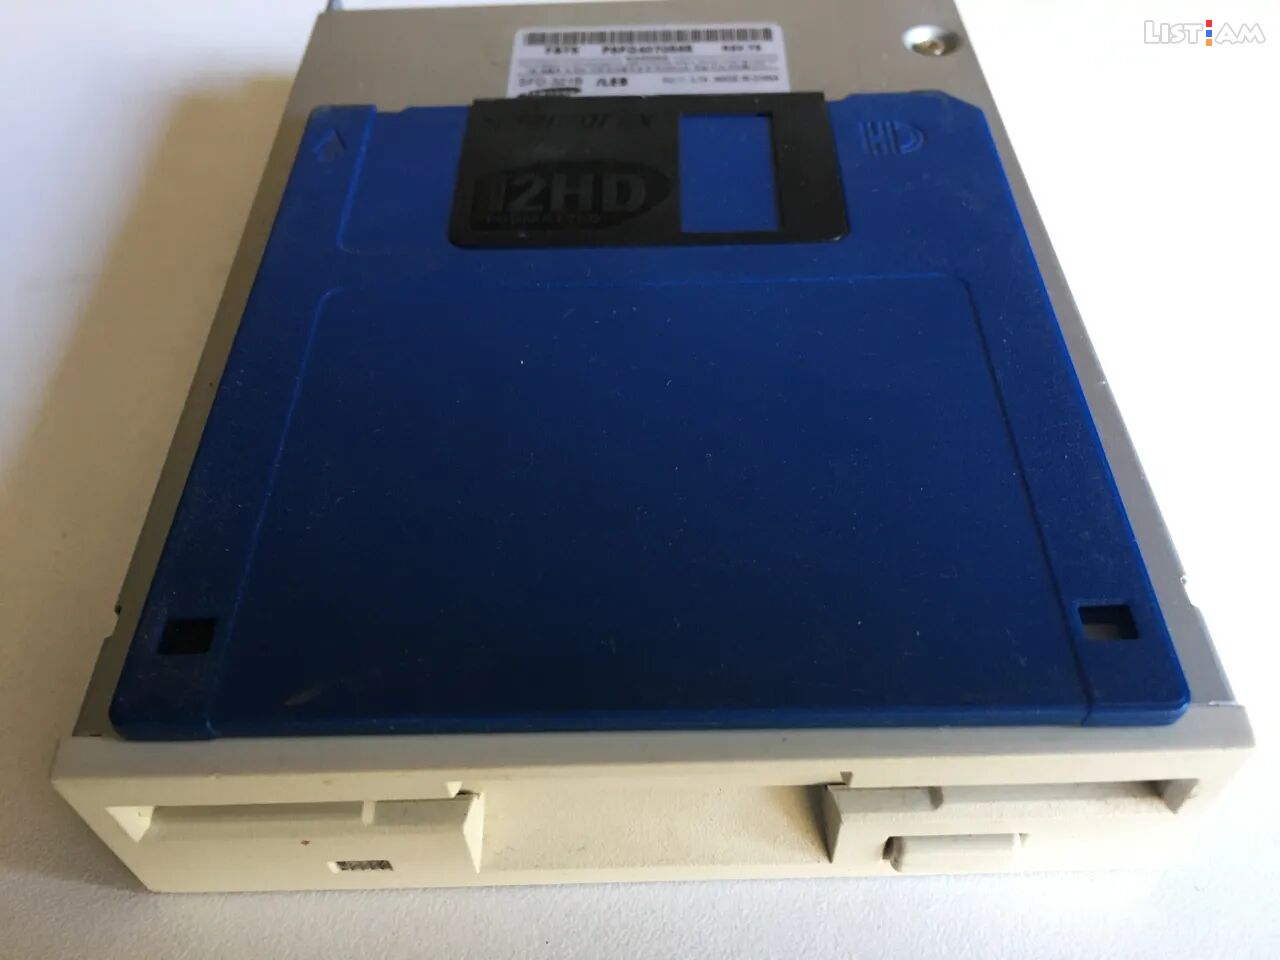 Floppy drive,